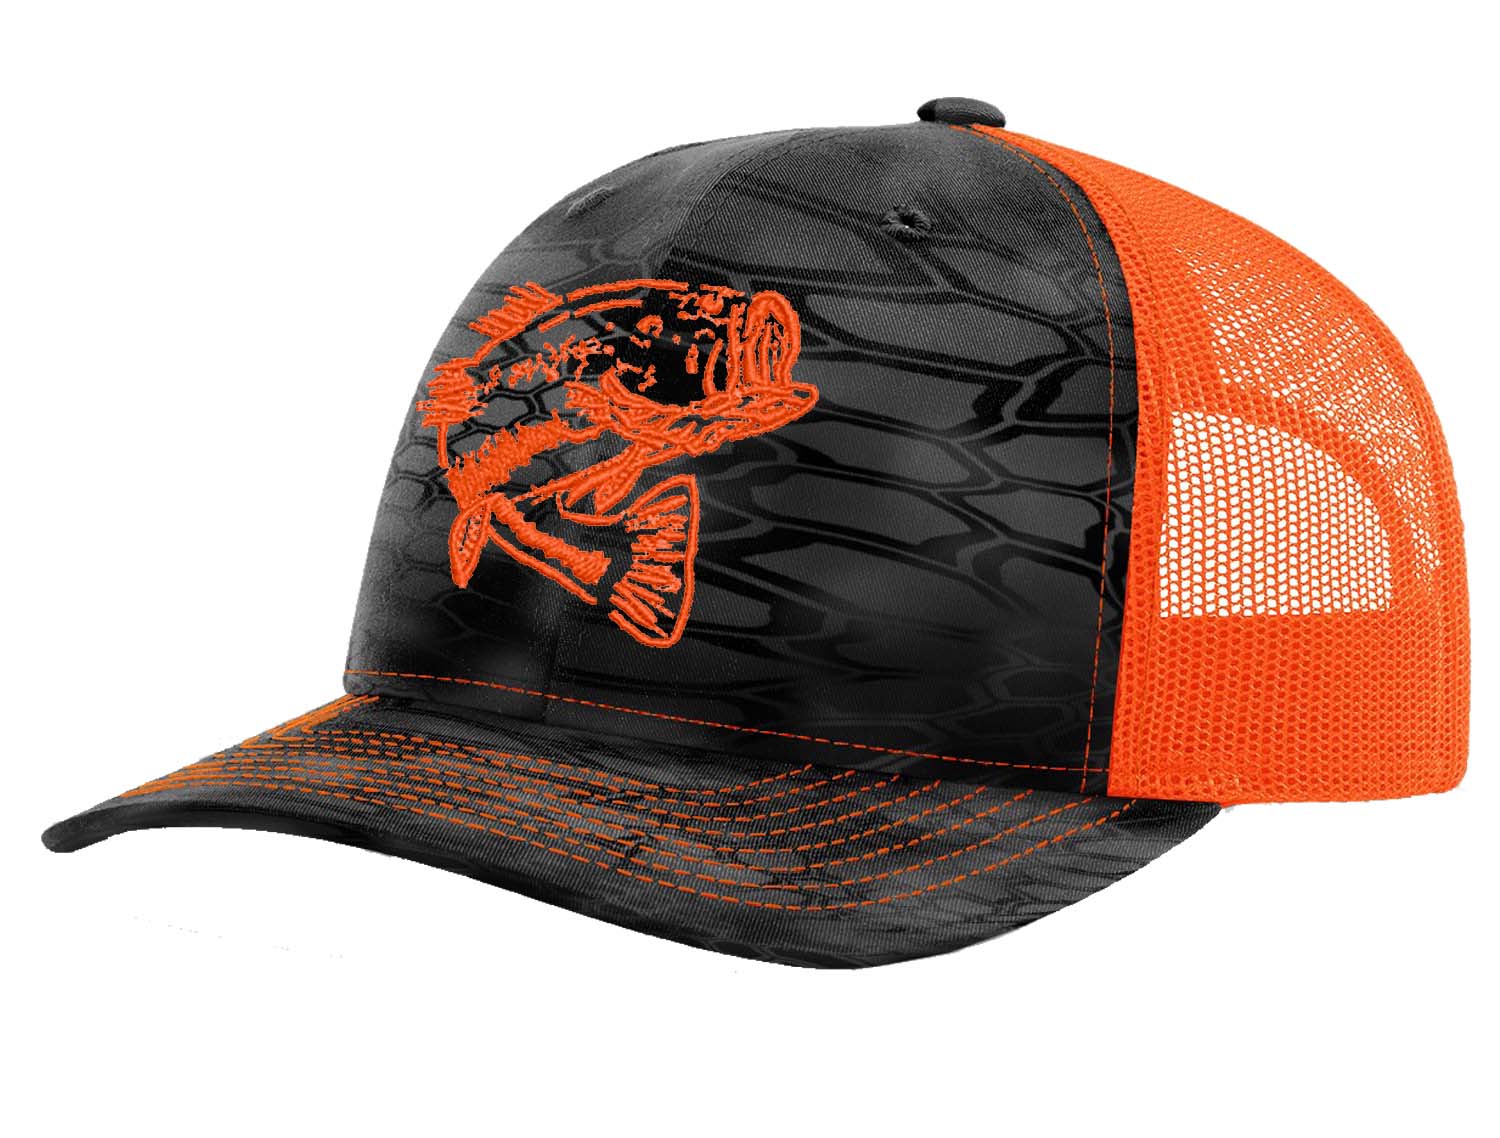 Bass "Reel Hawg" Structured Trucker Hat - Kryptek Neon Orange - Neon Orange Bass logo